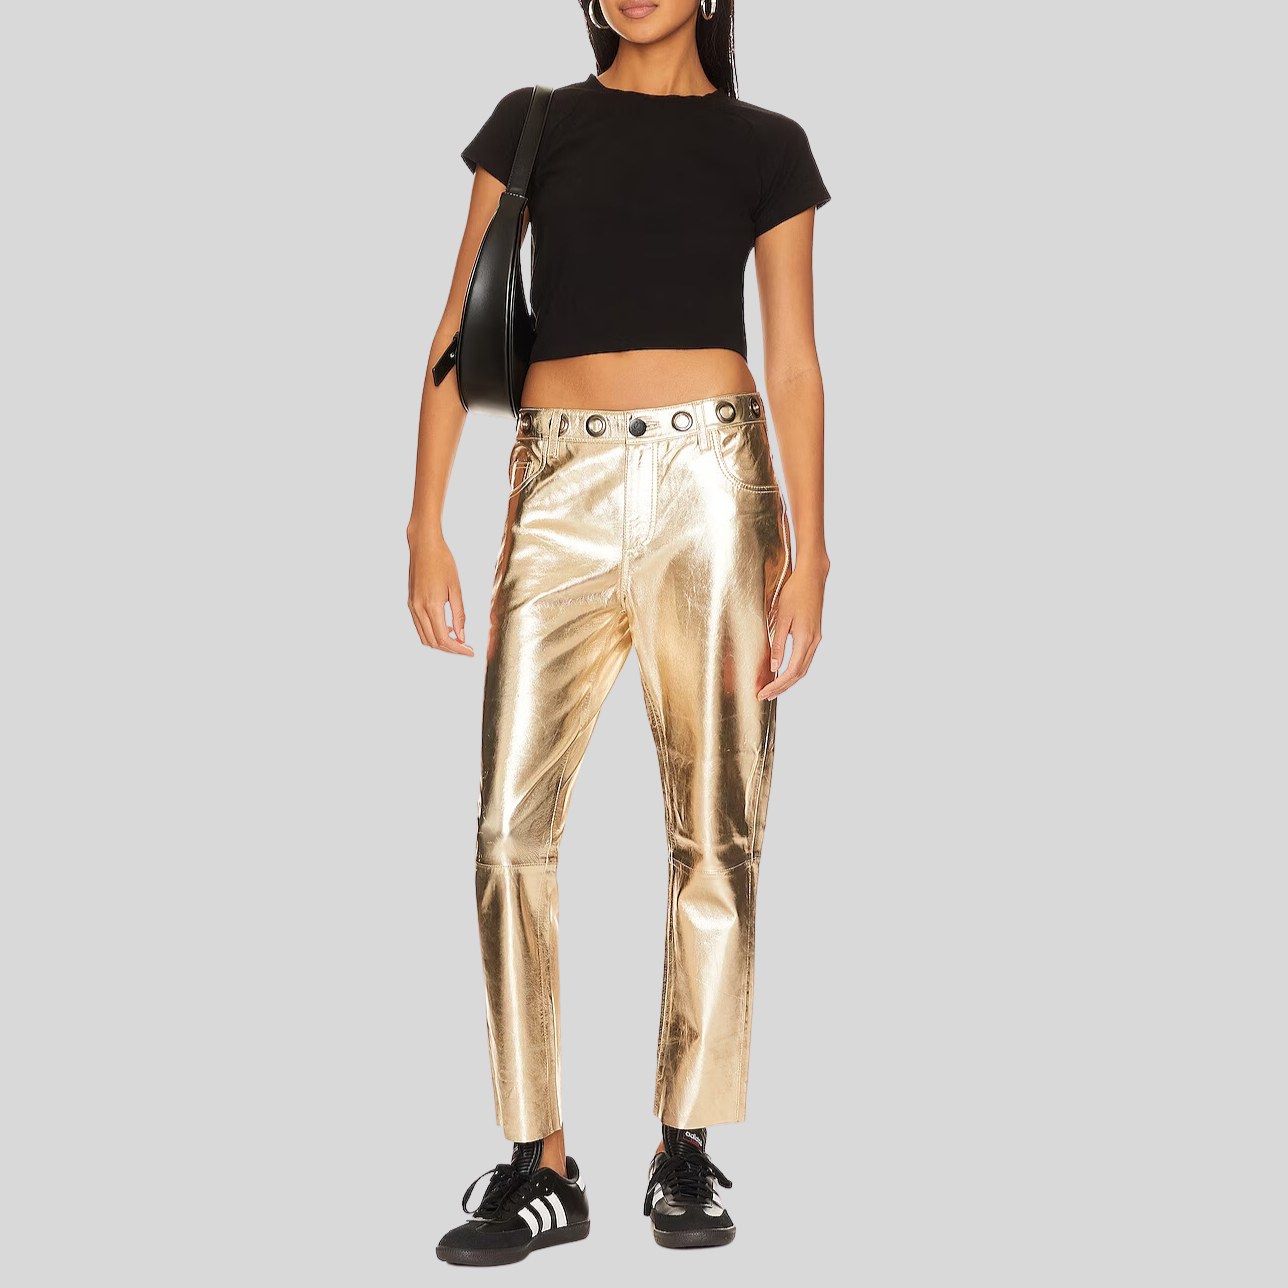 Gotstyle Fashion - One Teaspoon Pants Coated Leather Drop Crotch Pant - Gold